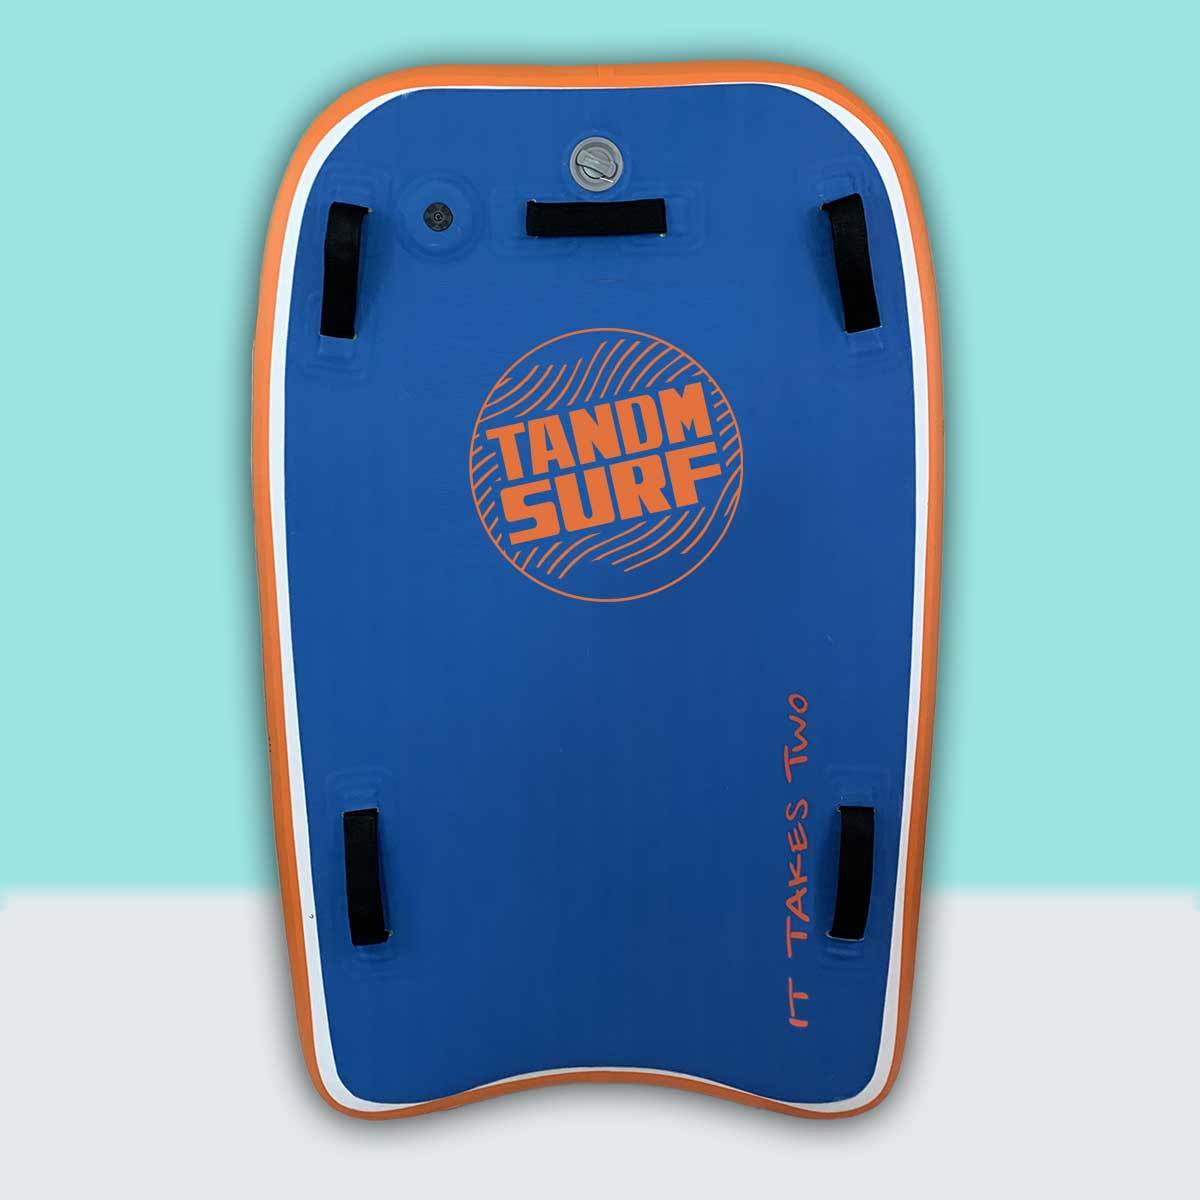 TANDM Surf Bodyboard - 2 Pack Wholesale